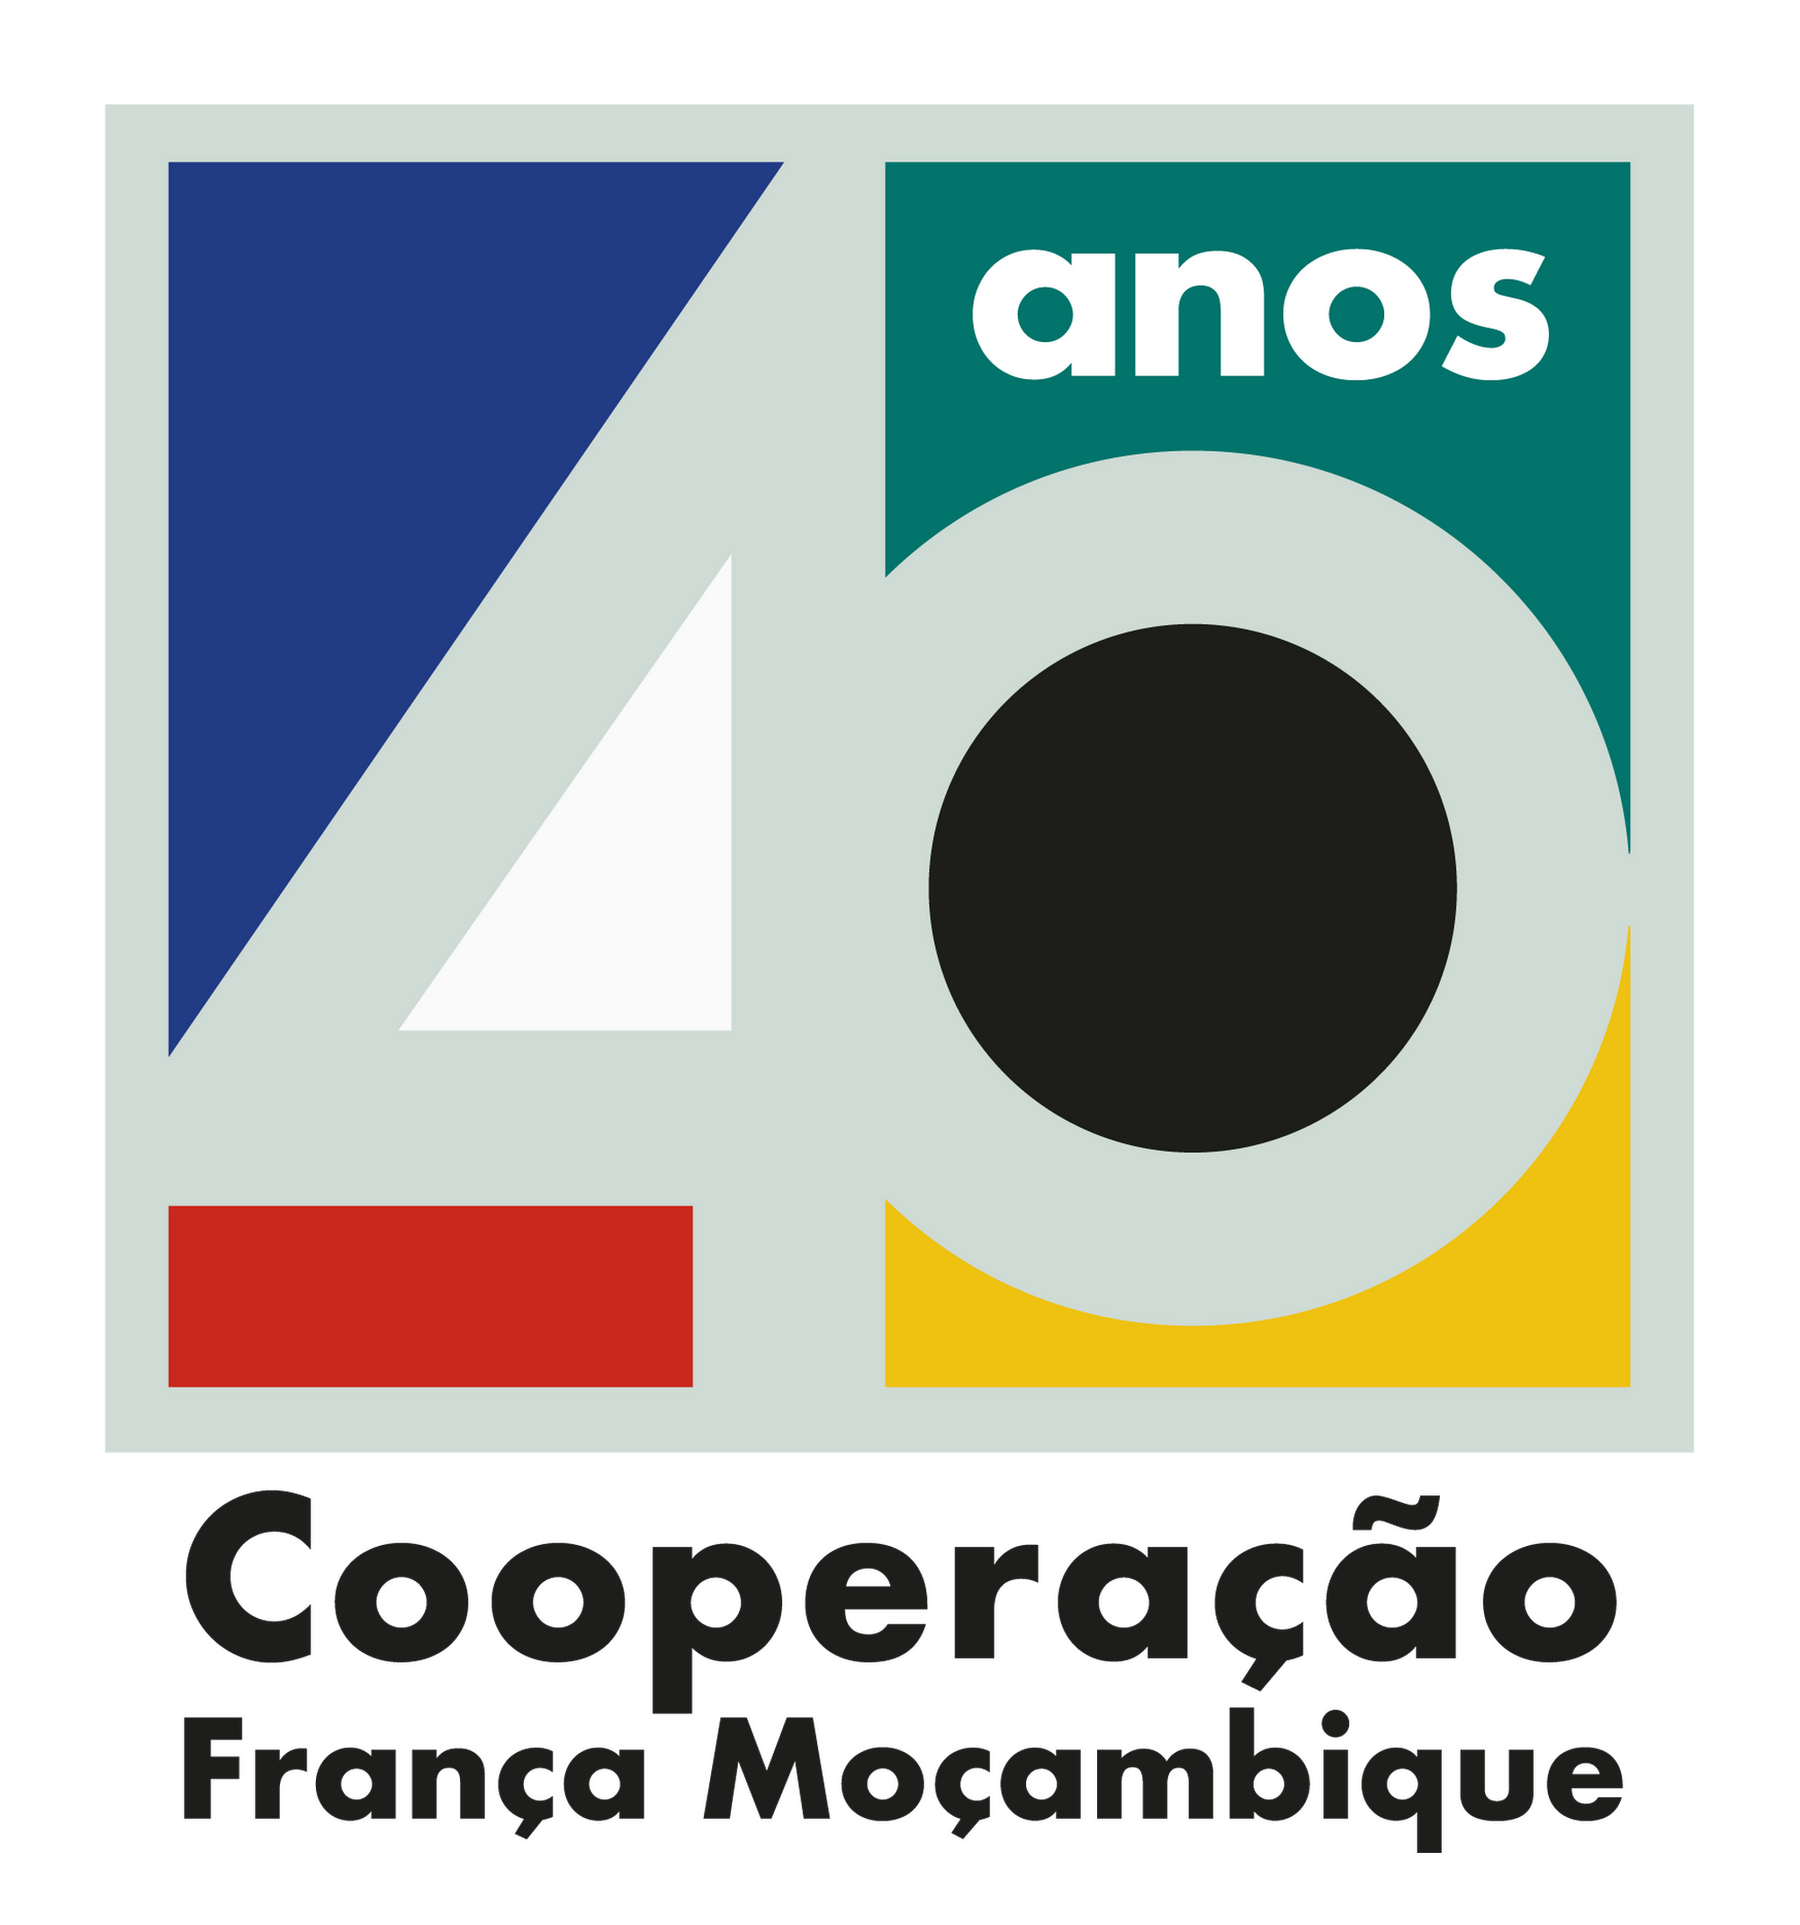 HD Embaixada Franc ºa Nov 2021 Logo 40 anos Cores RGB